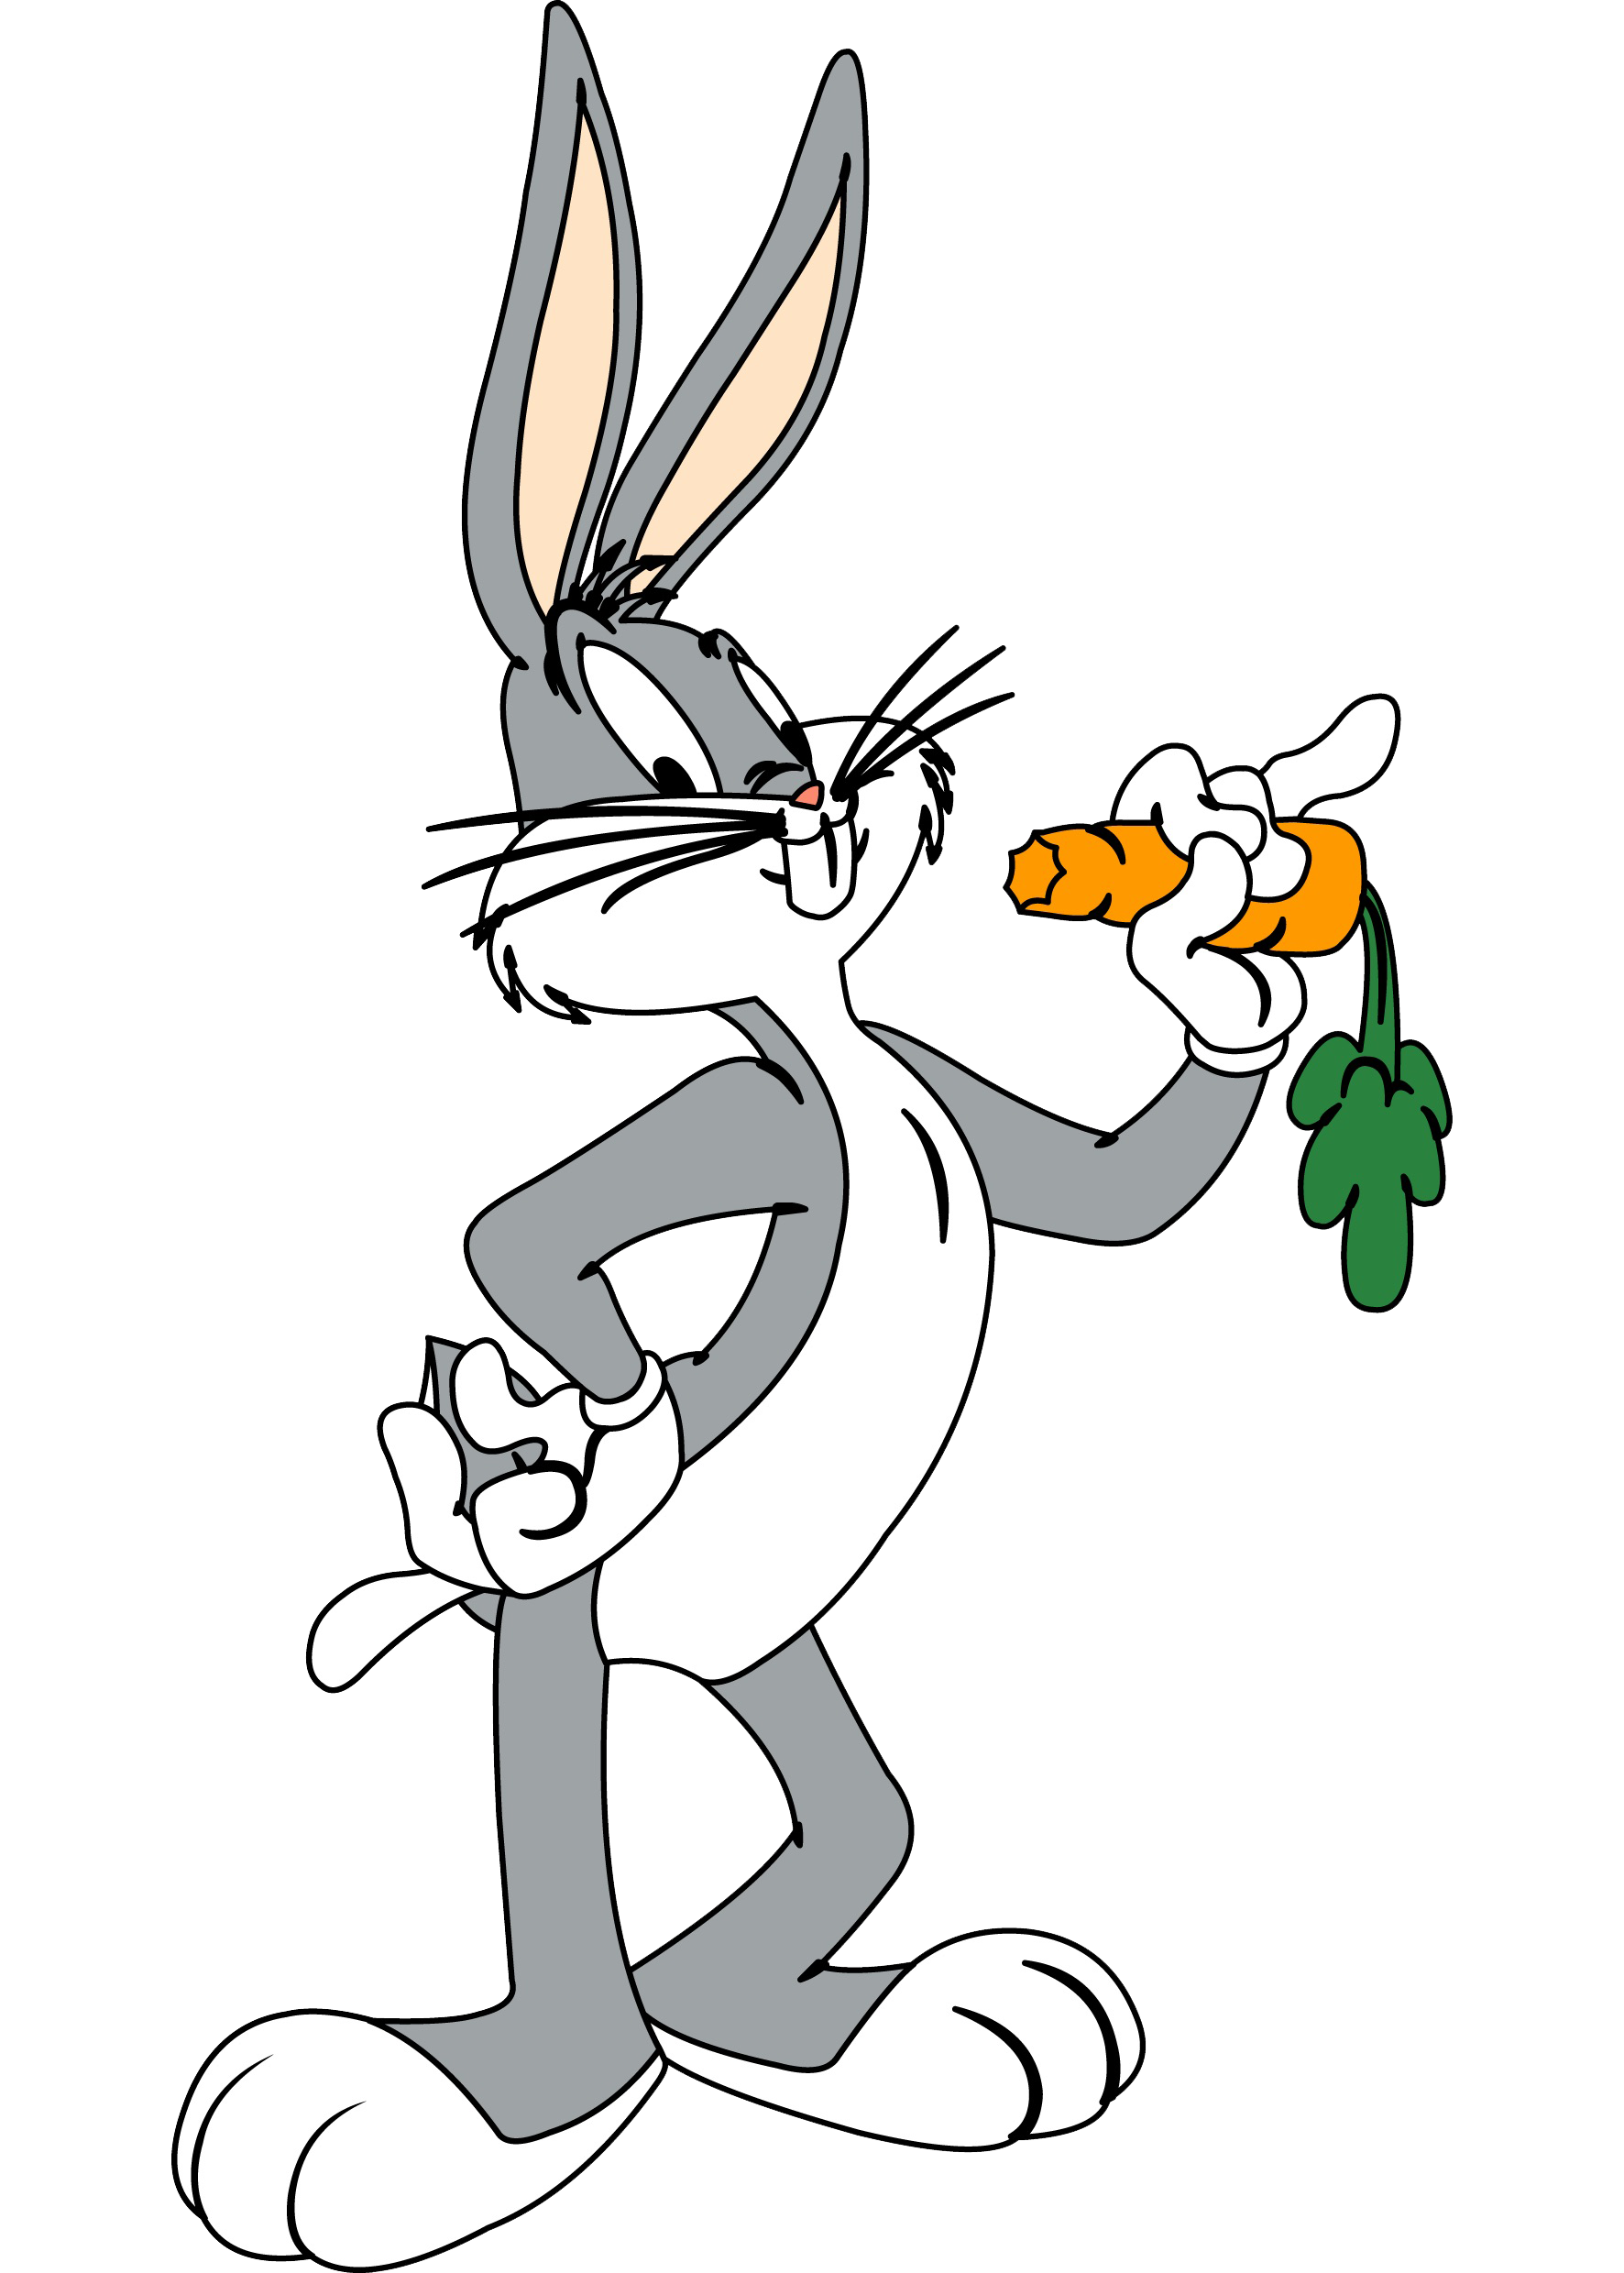 Bugs Bunny : All American Hero